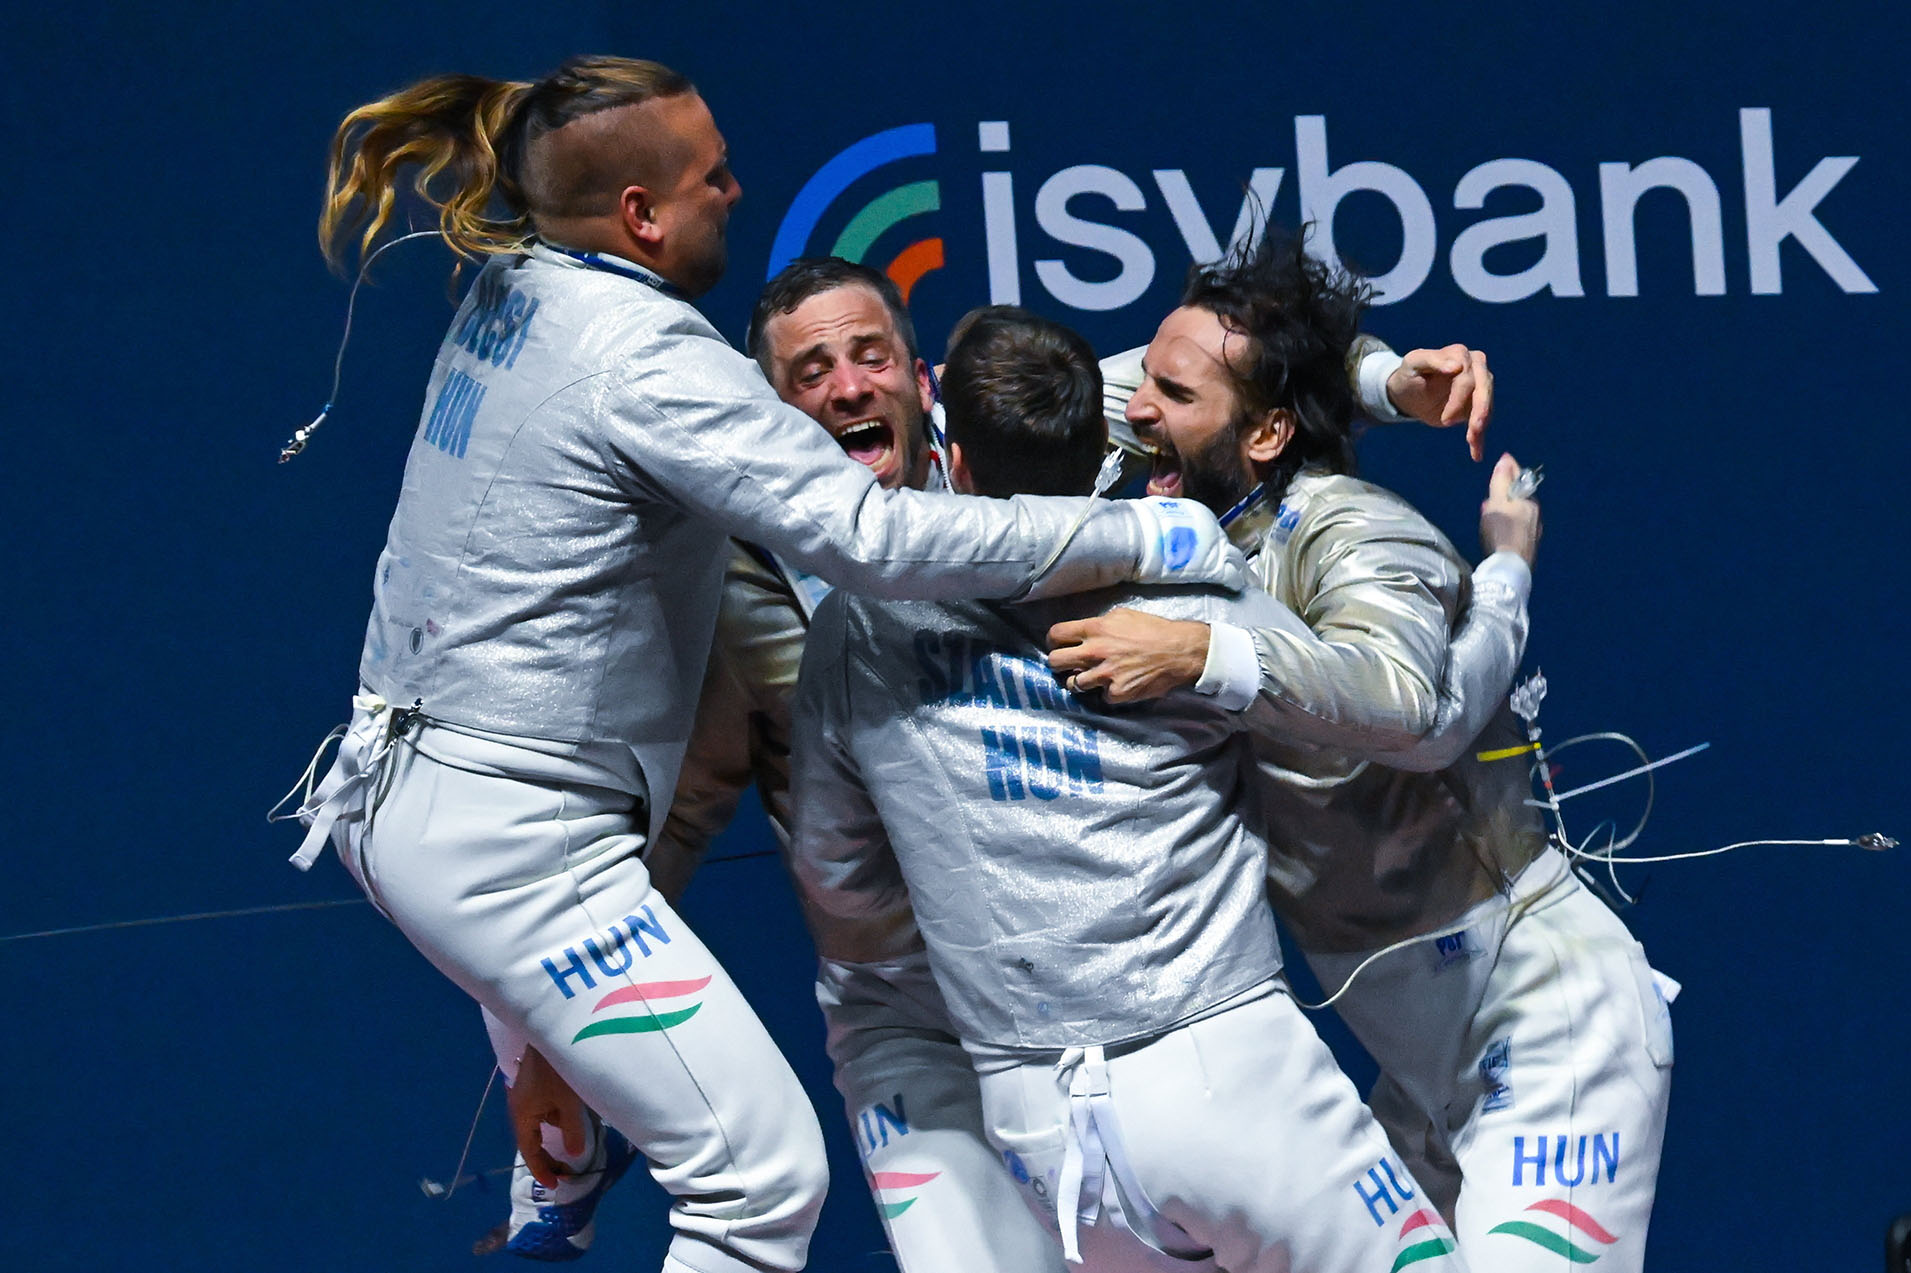 Weltmeister! Fechtteam der Männer gewinnt Gold in Italien